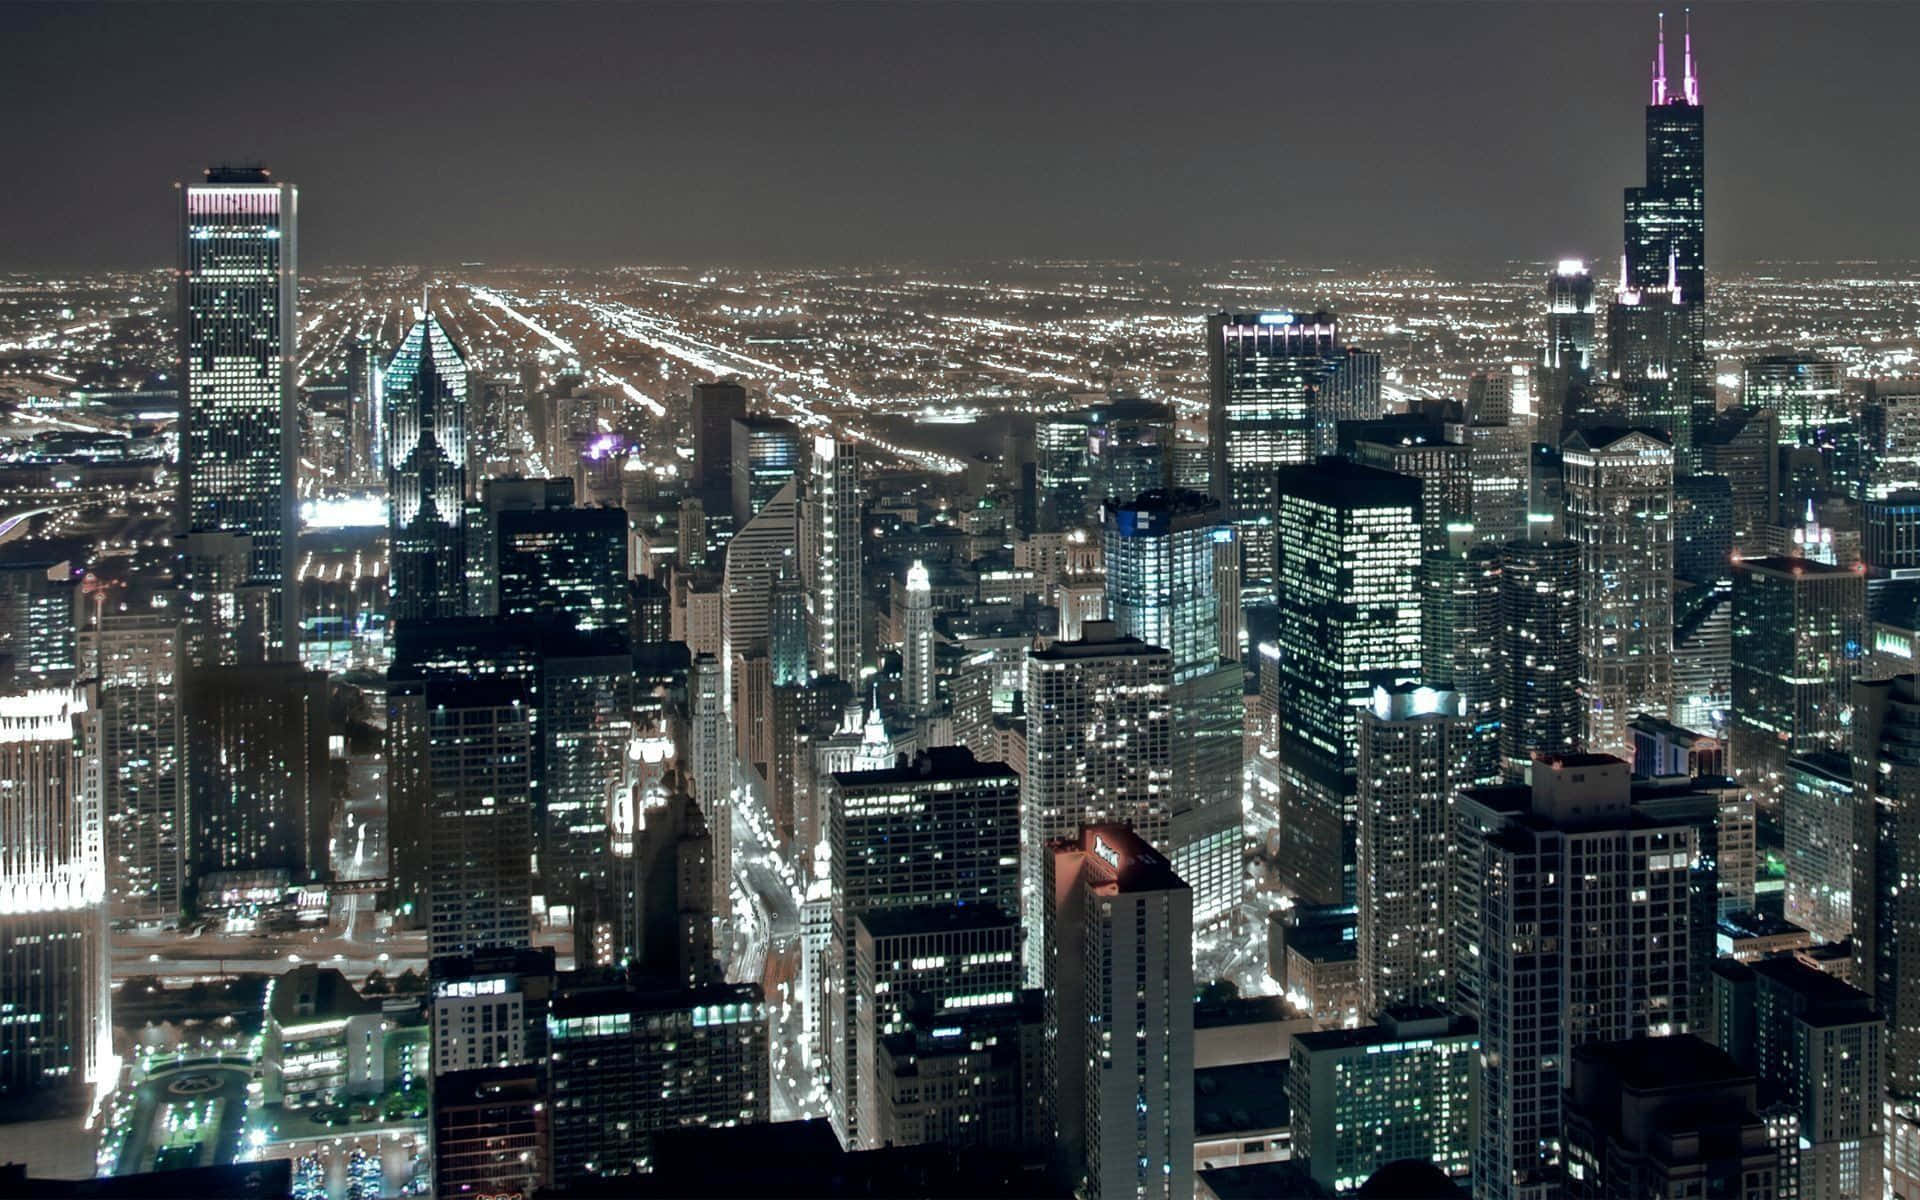 Chicagocity Night Dark Skyline In Italian Would Be 